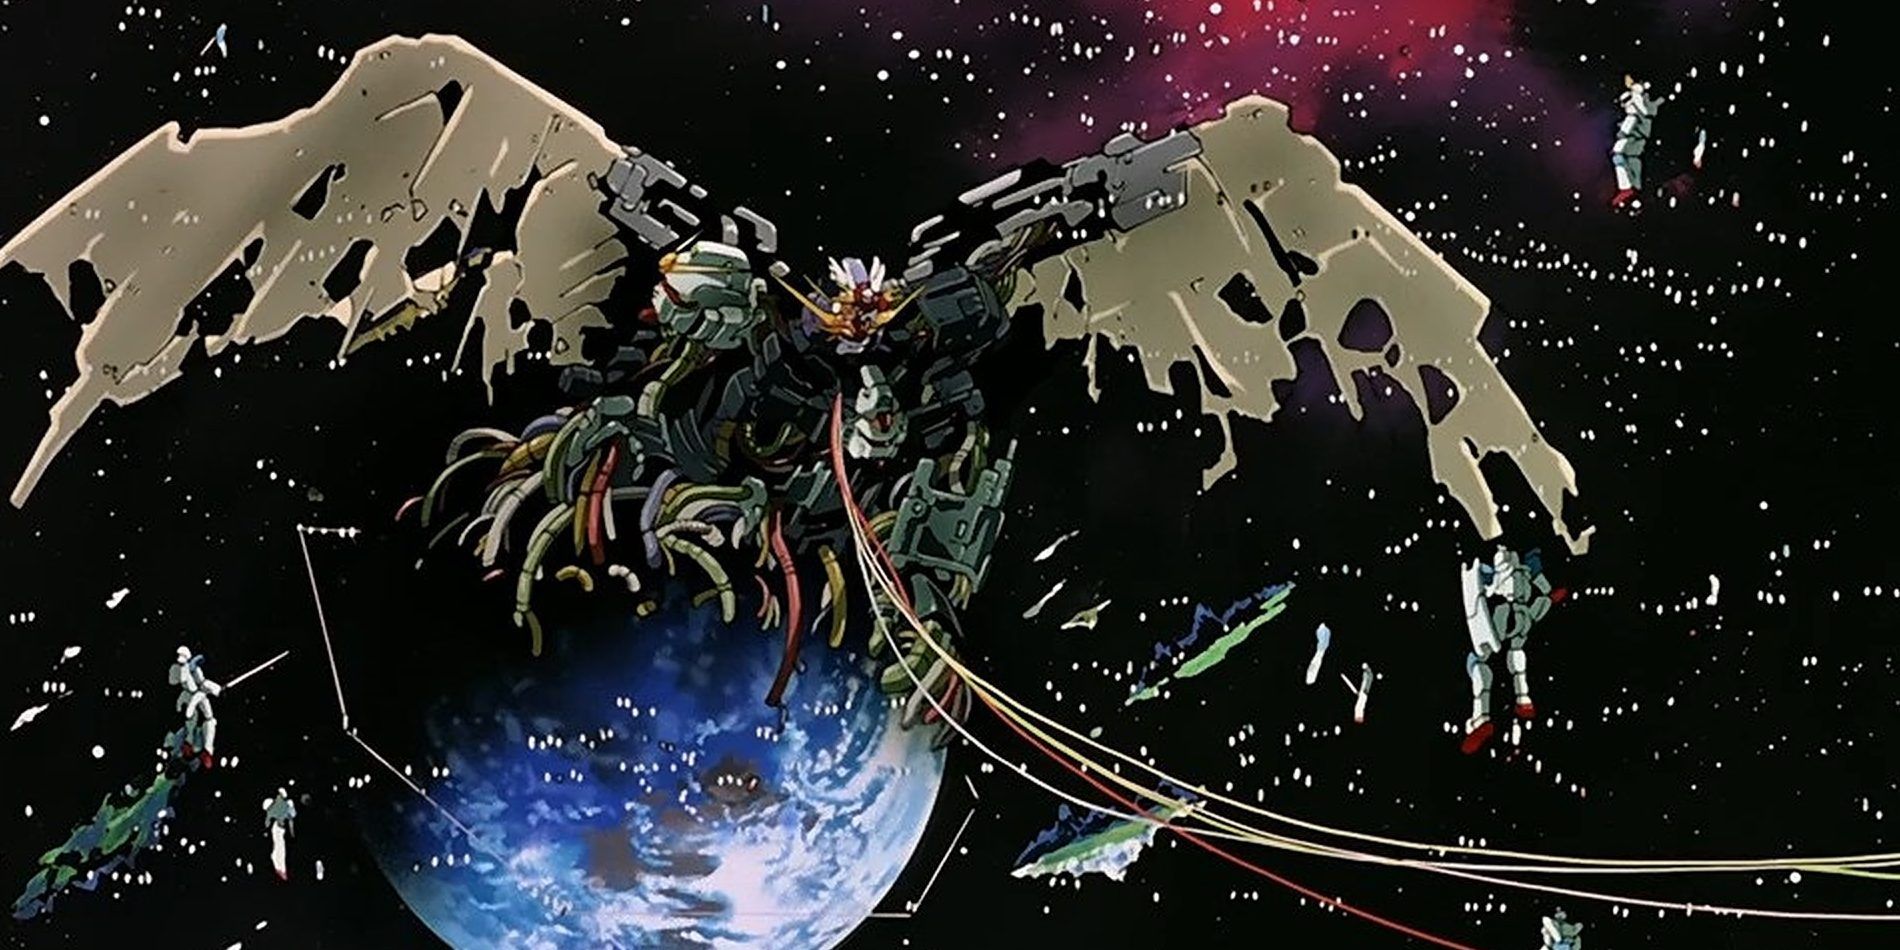 6 Gundams That Are Pure Robot Nightmare Fuel